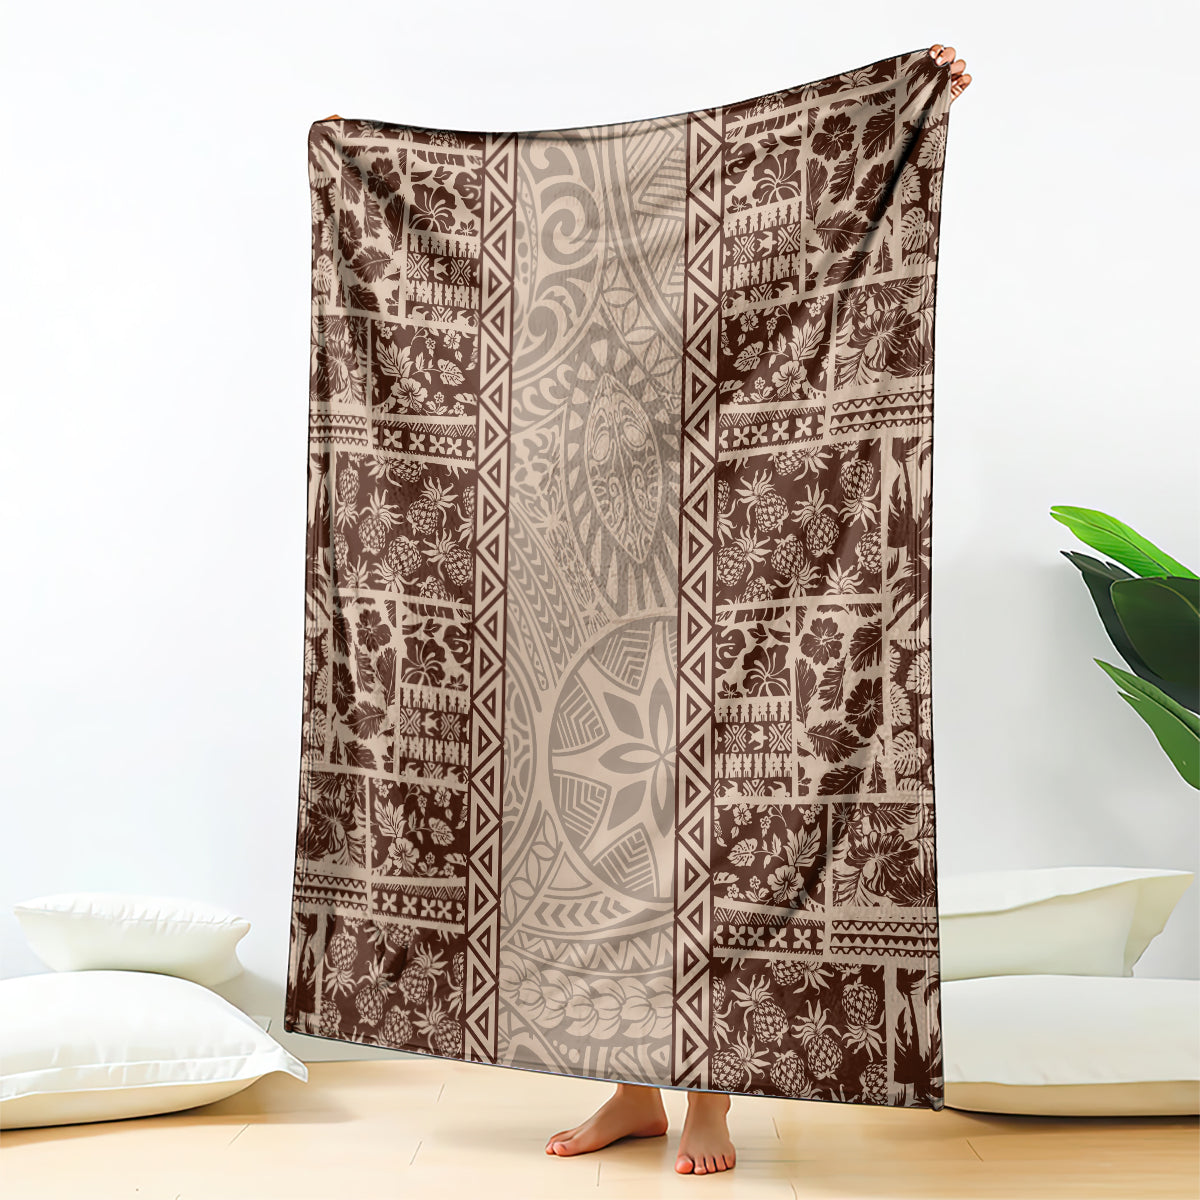 Hawaii Style Hibiscus and Tribal Element Fabric Patchwork Blanket Beige Version LT03 Beige - Polynesian Pride